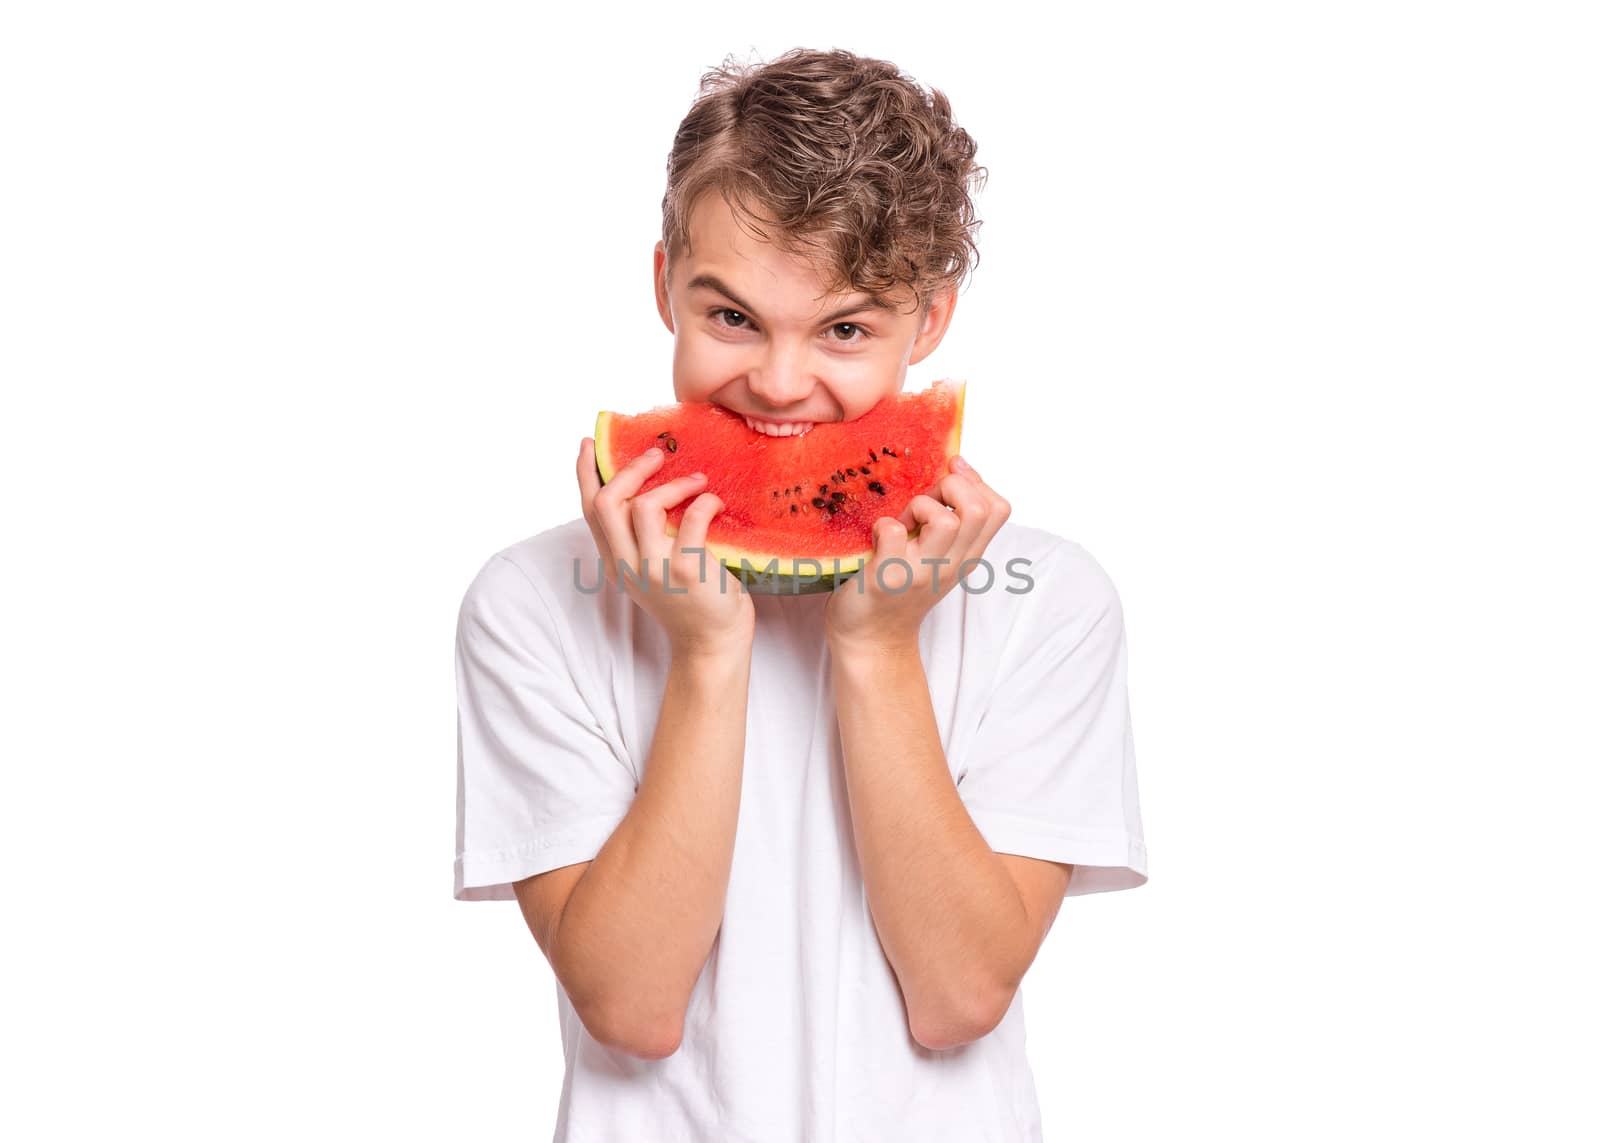 Teen boy eating watermelon by VaLiza